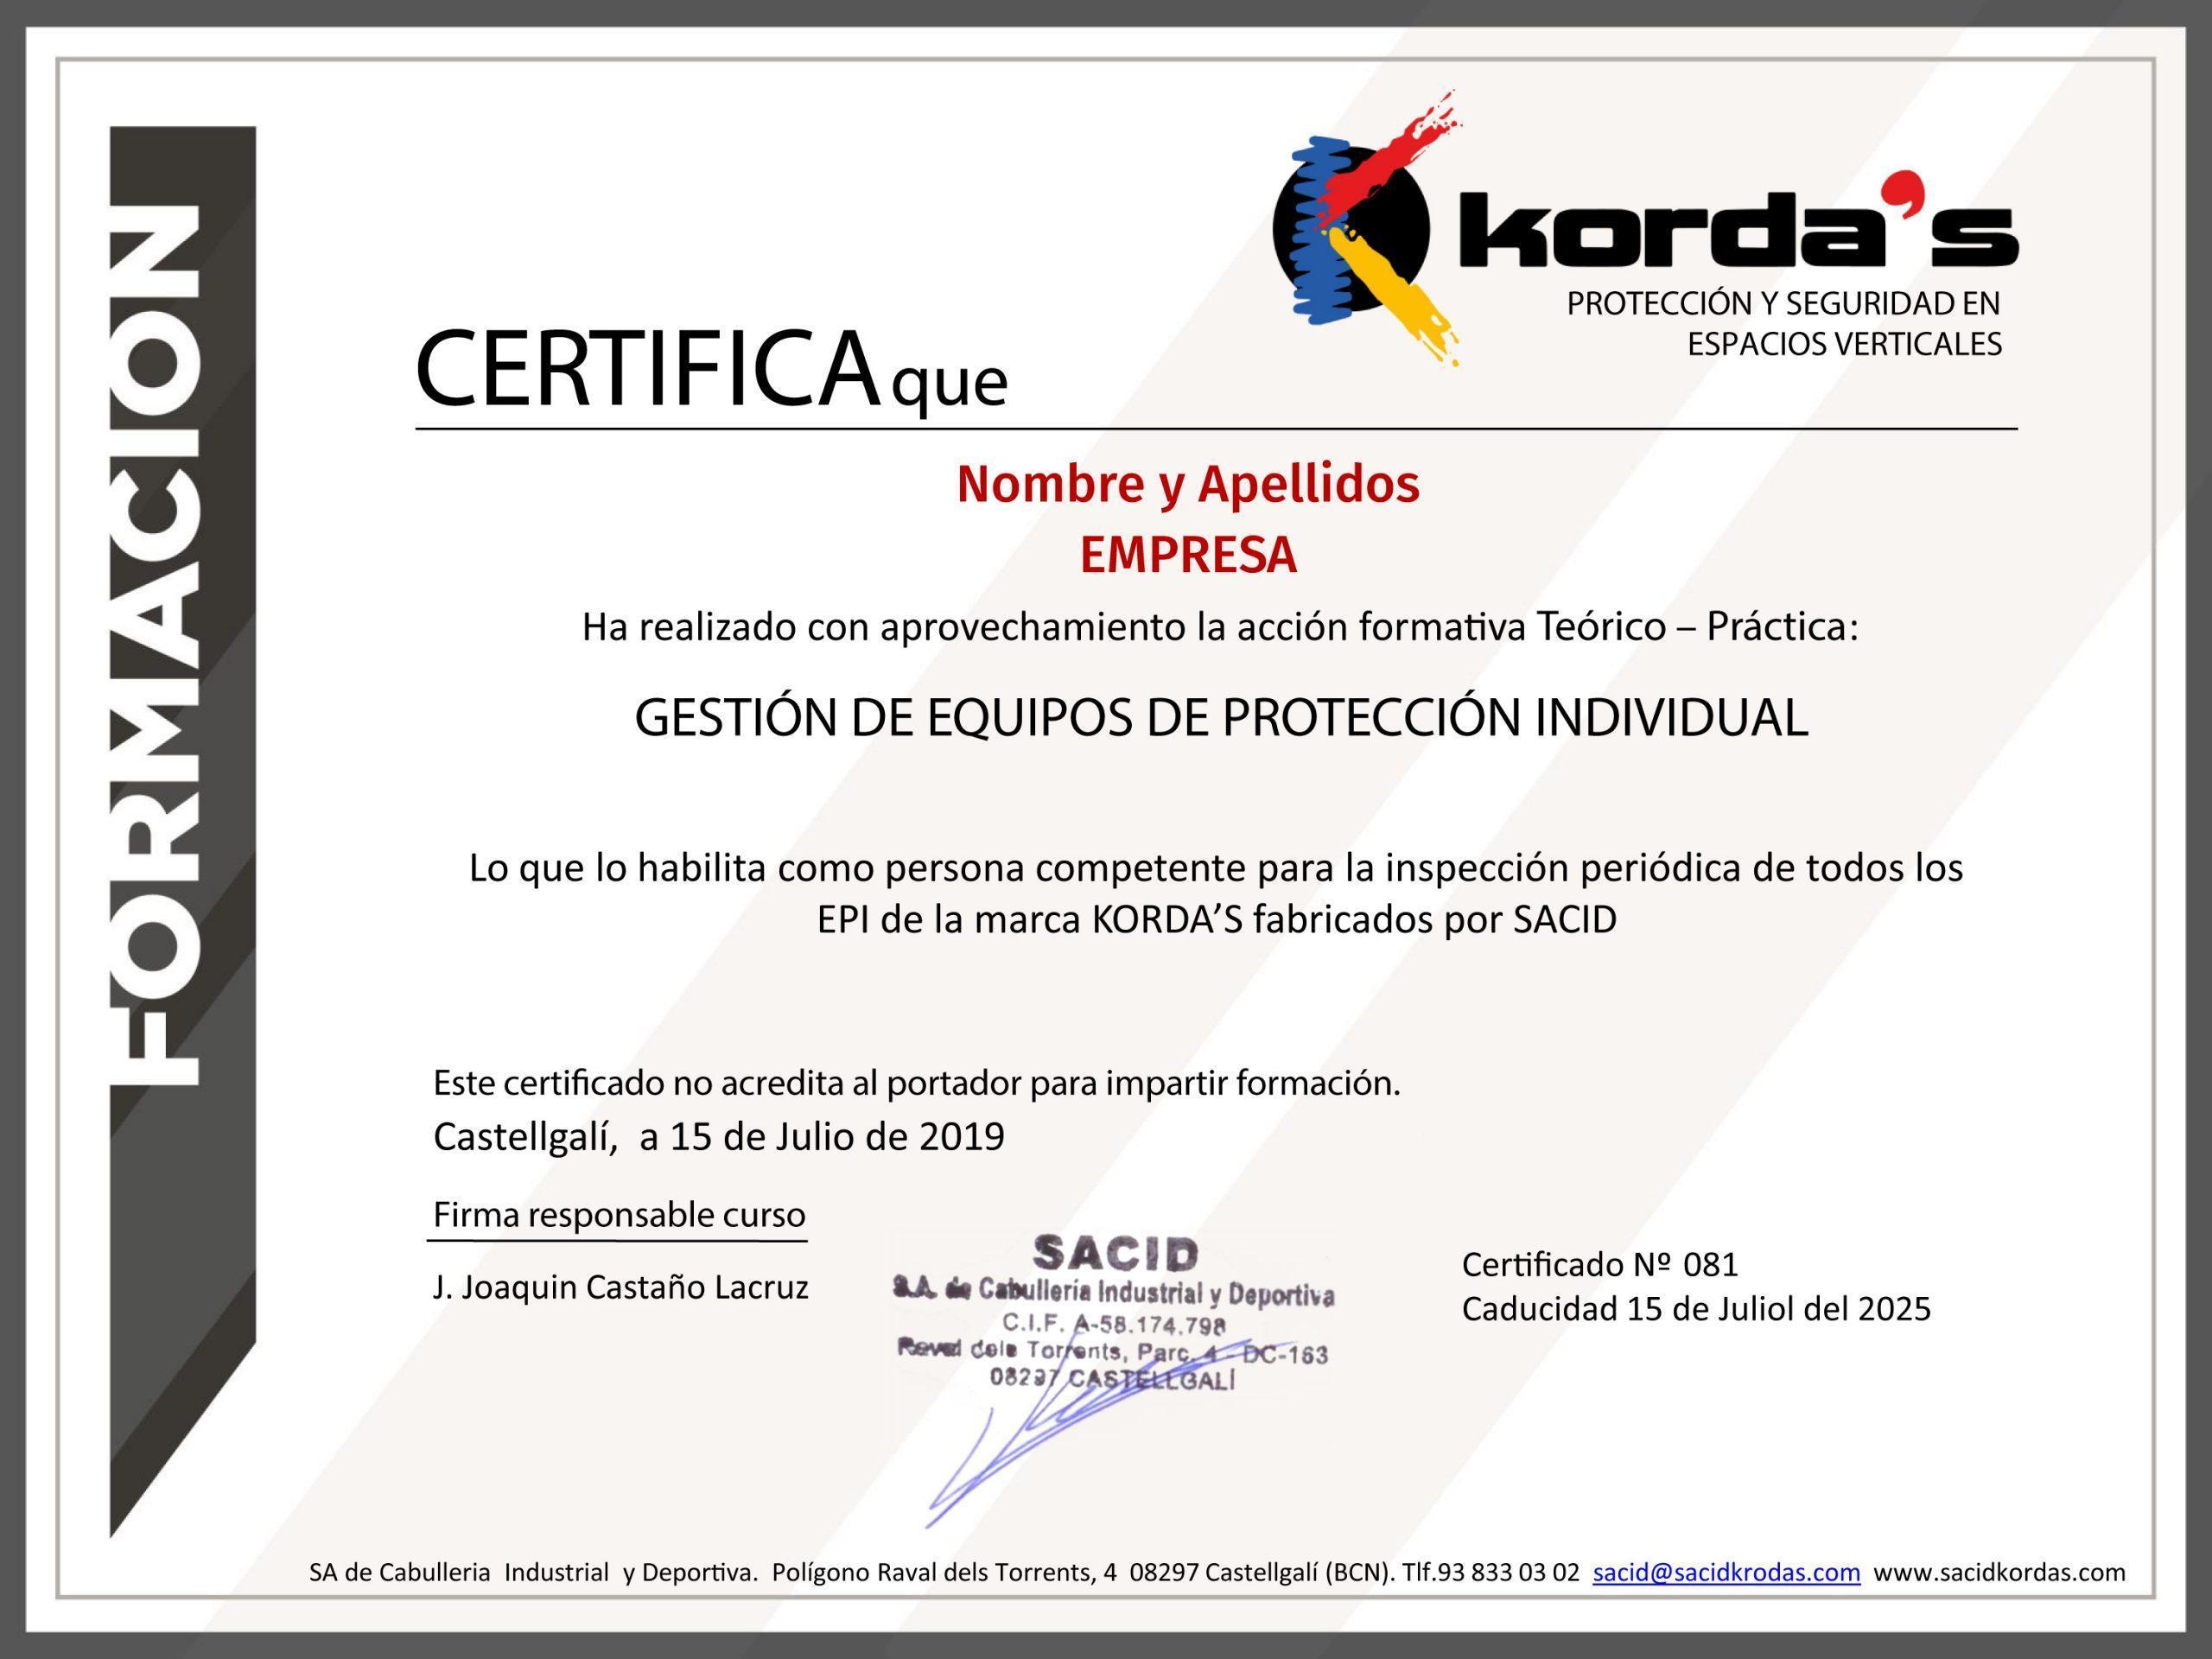 certification kordas